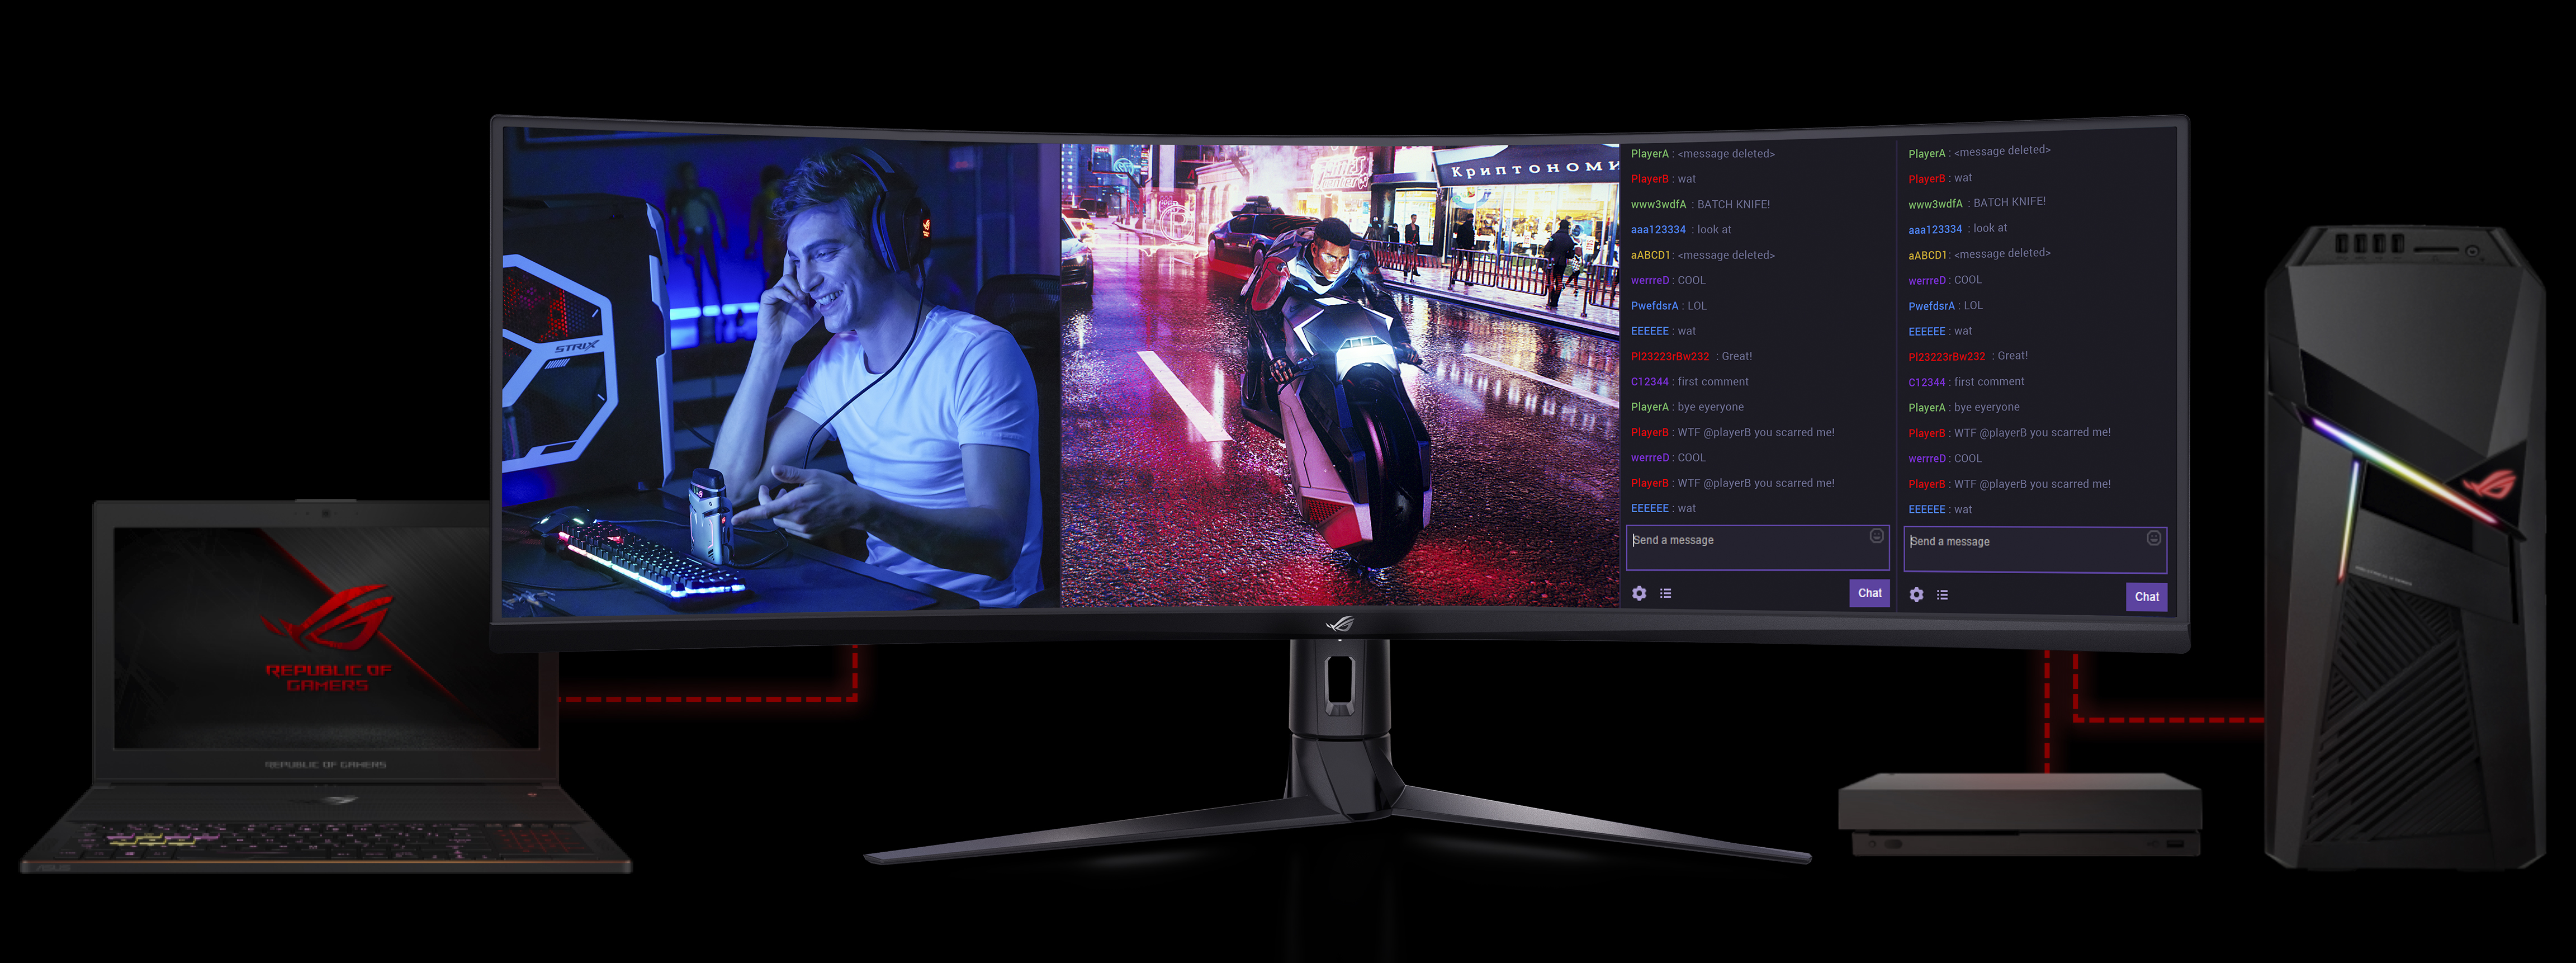 Super ultra široká obrazovka s funkciou Obraz vedľa obrazu pri monitore Asus XG49VQ